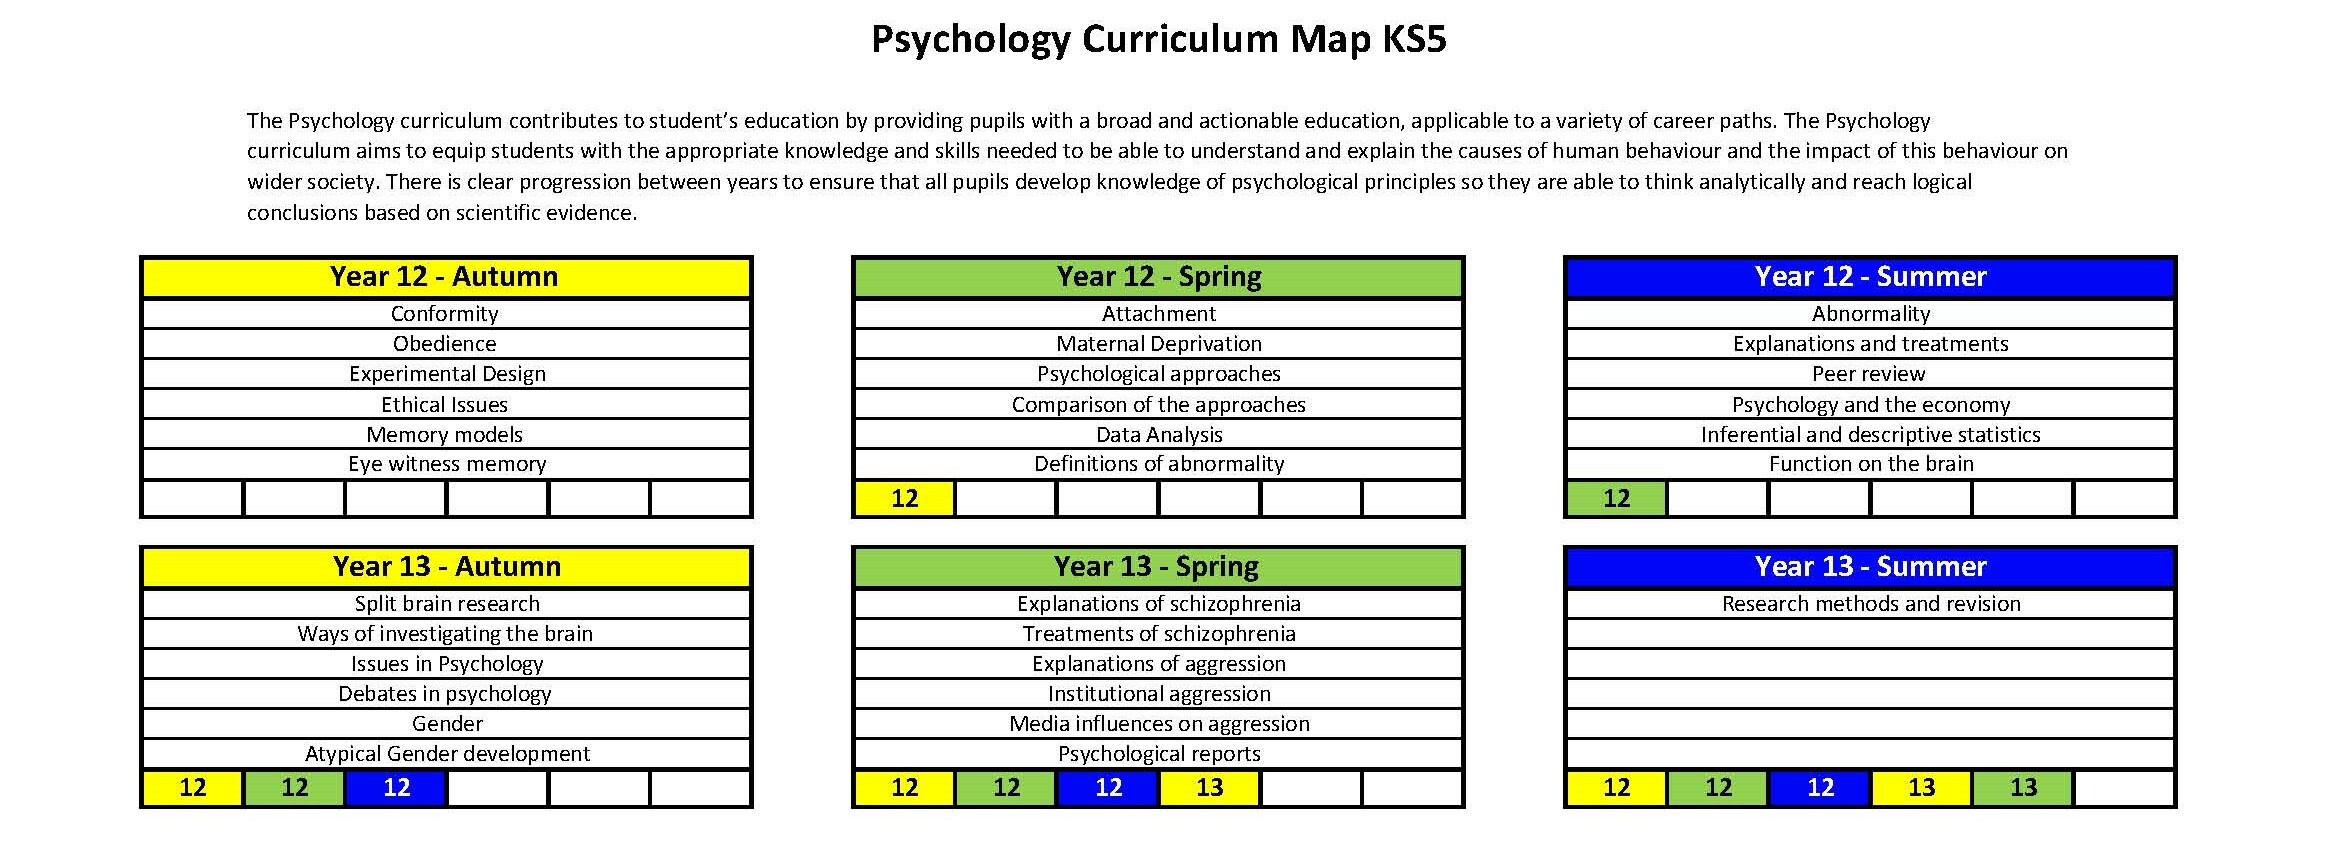 Ks5 curriculum map psychology